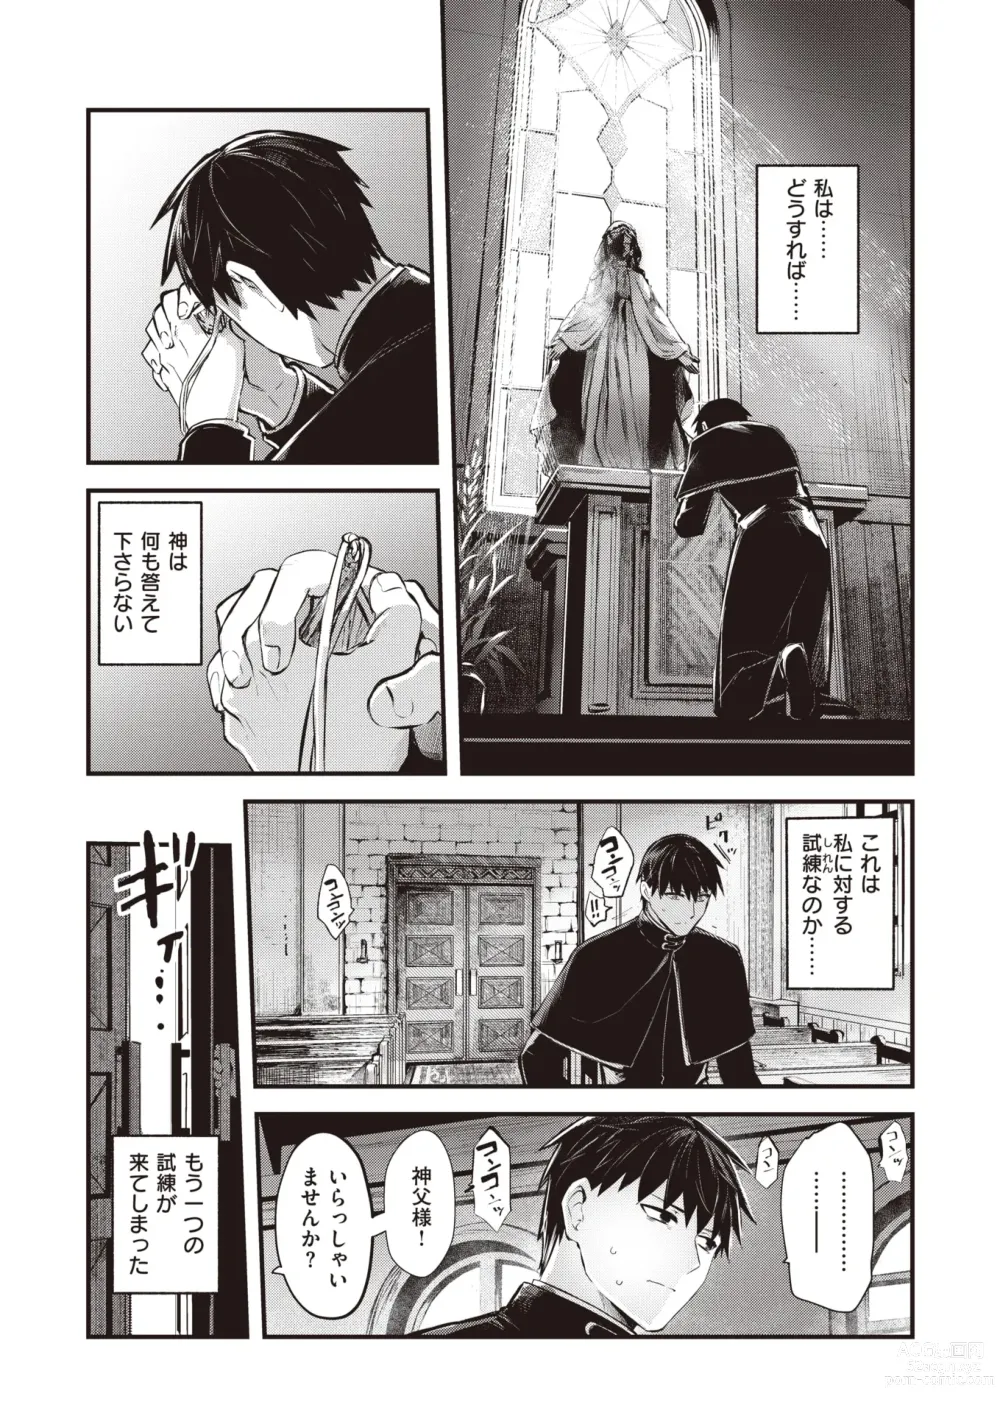 Page 4 of manga Isekai Rakuten Vol. 22